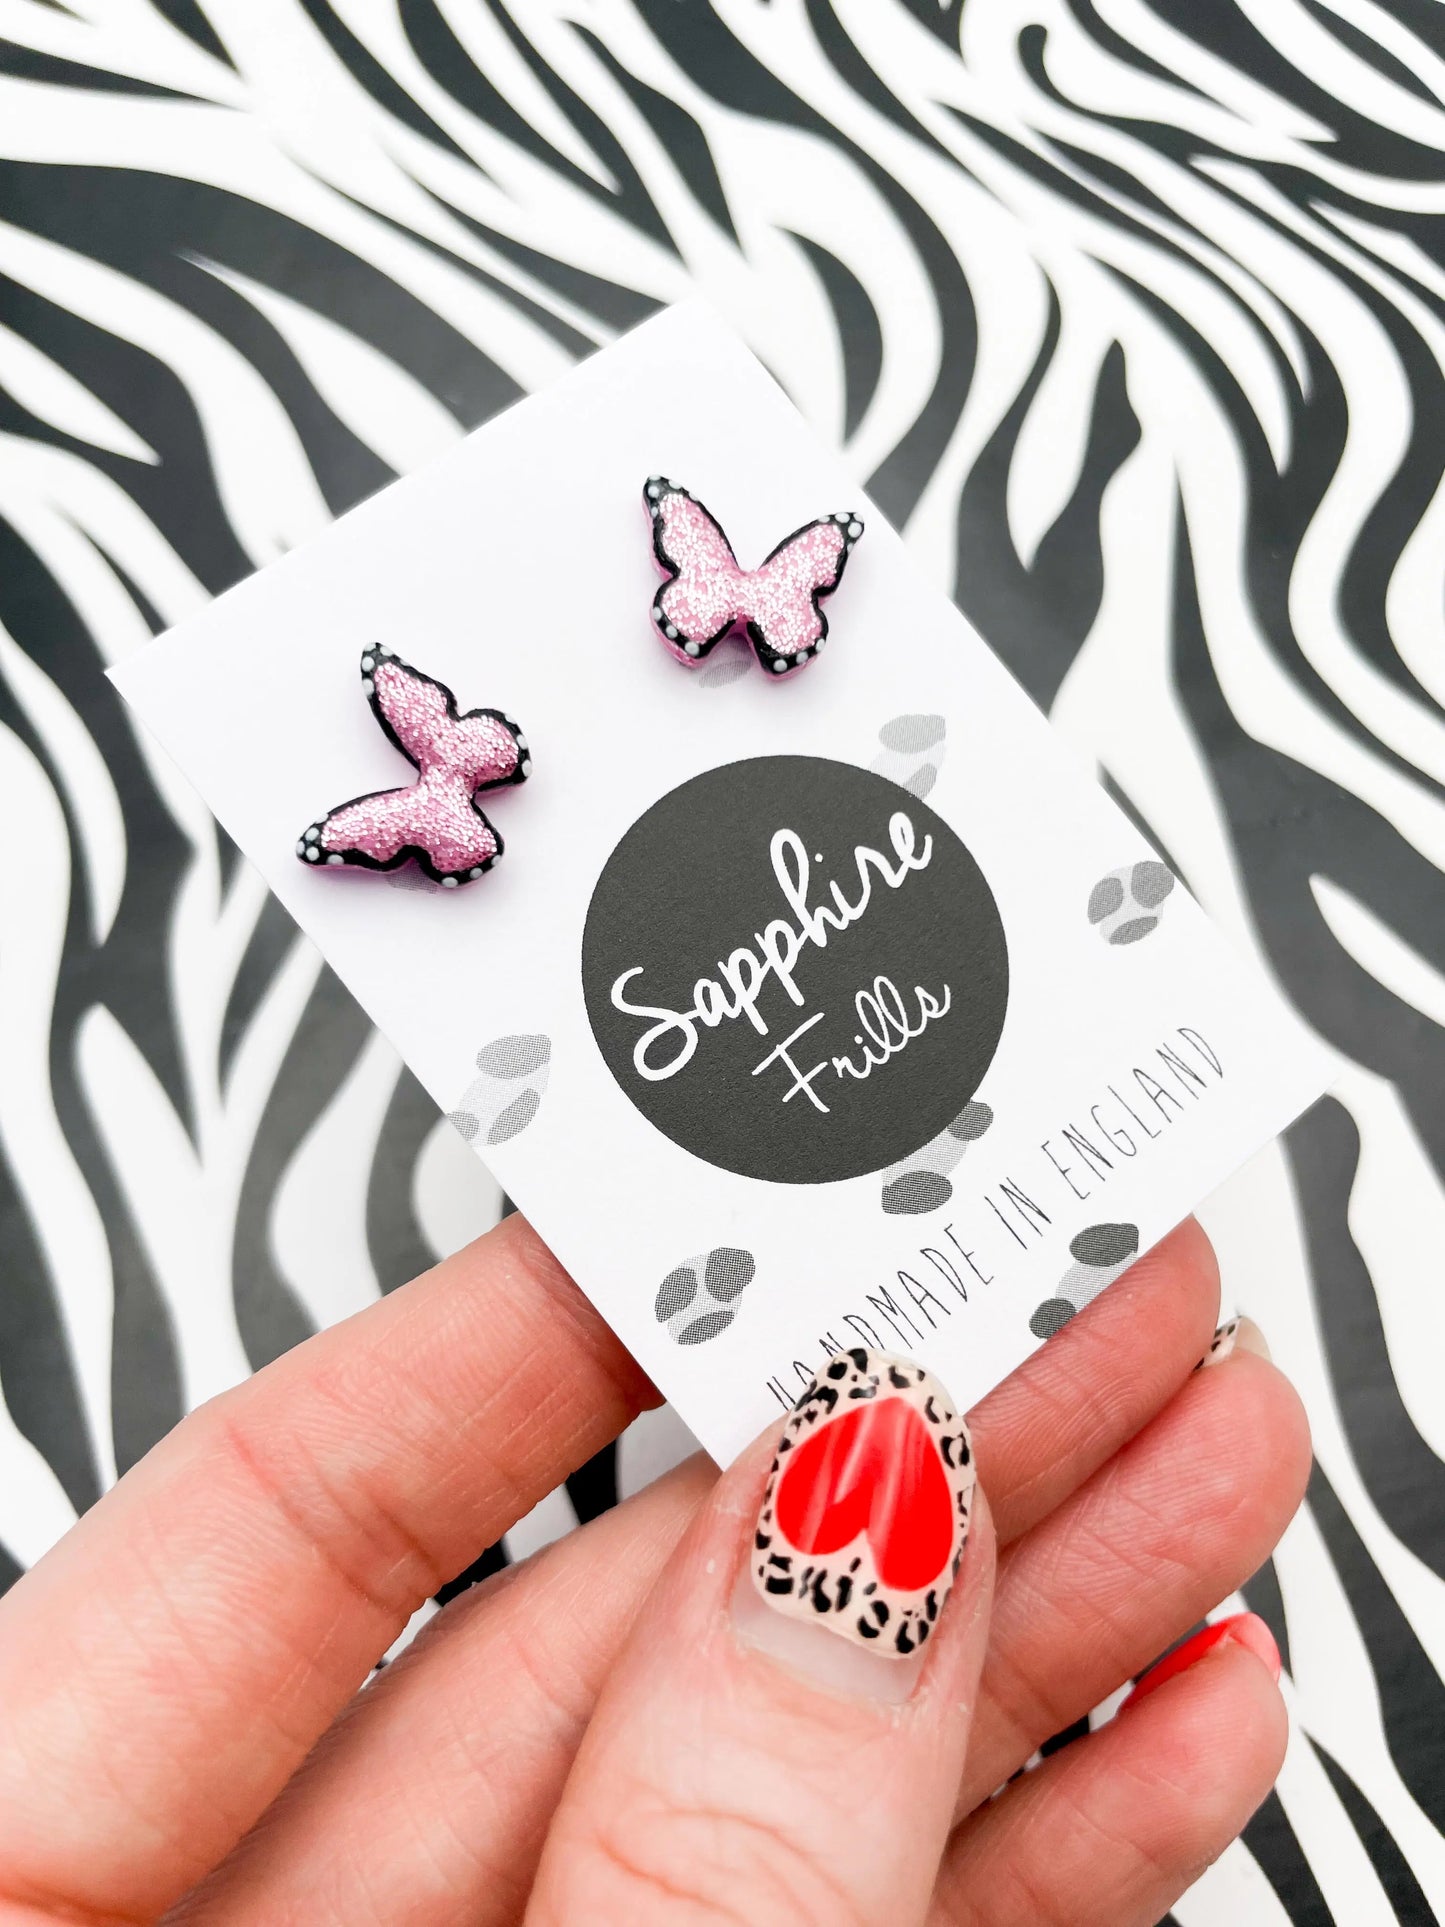 Mini Pink Glitter Butterfly Stud Earrings from Sapphire Frills